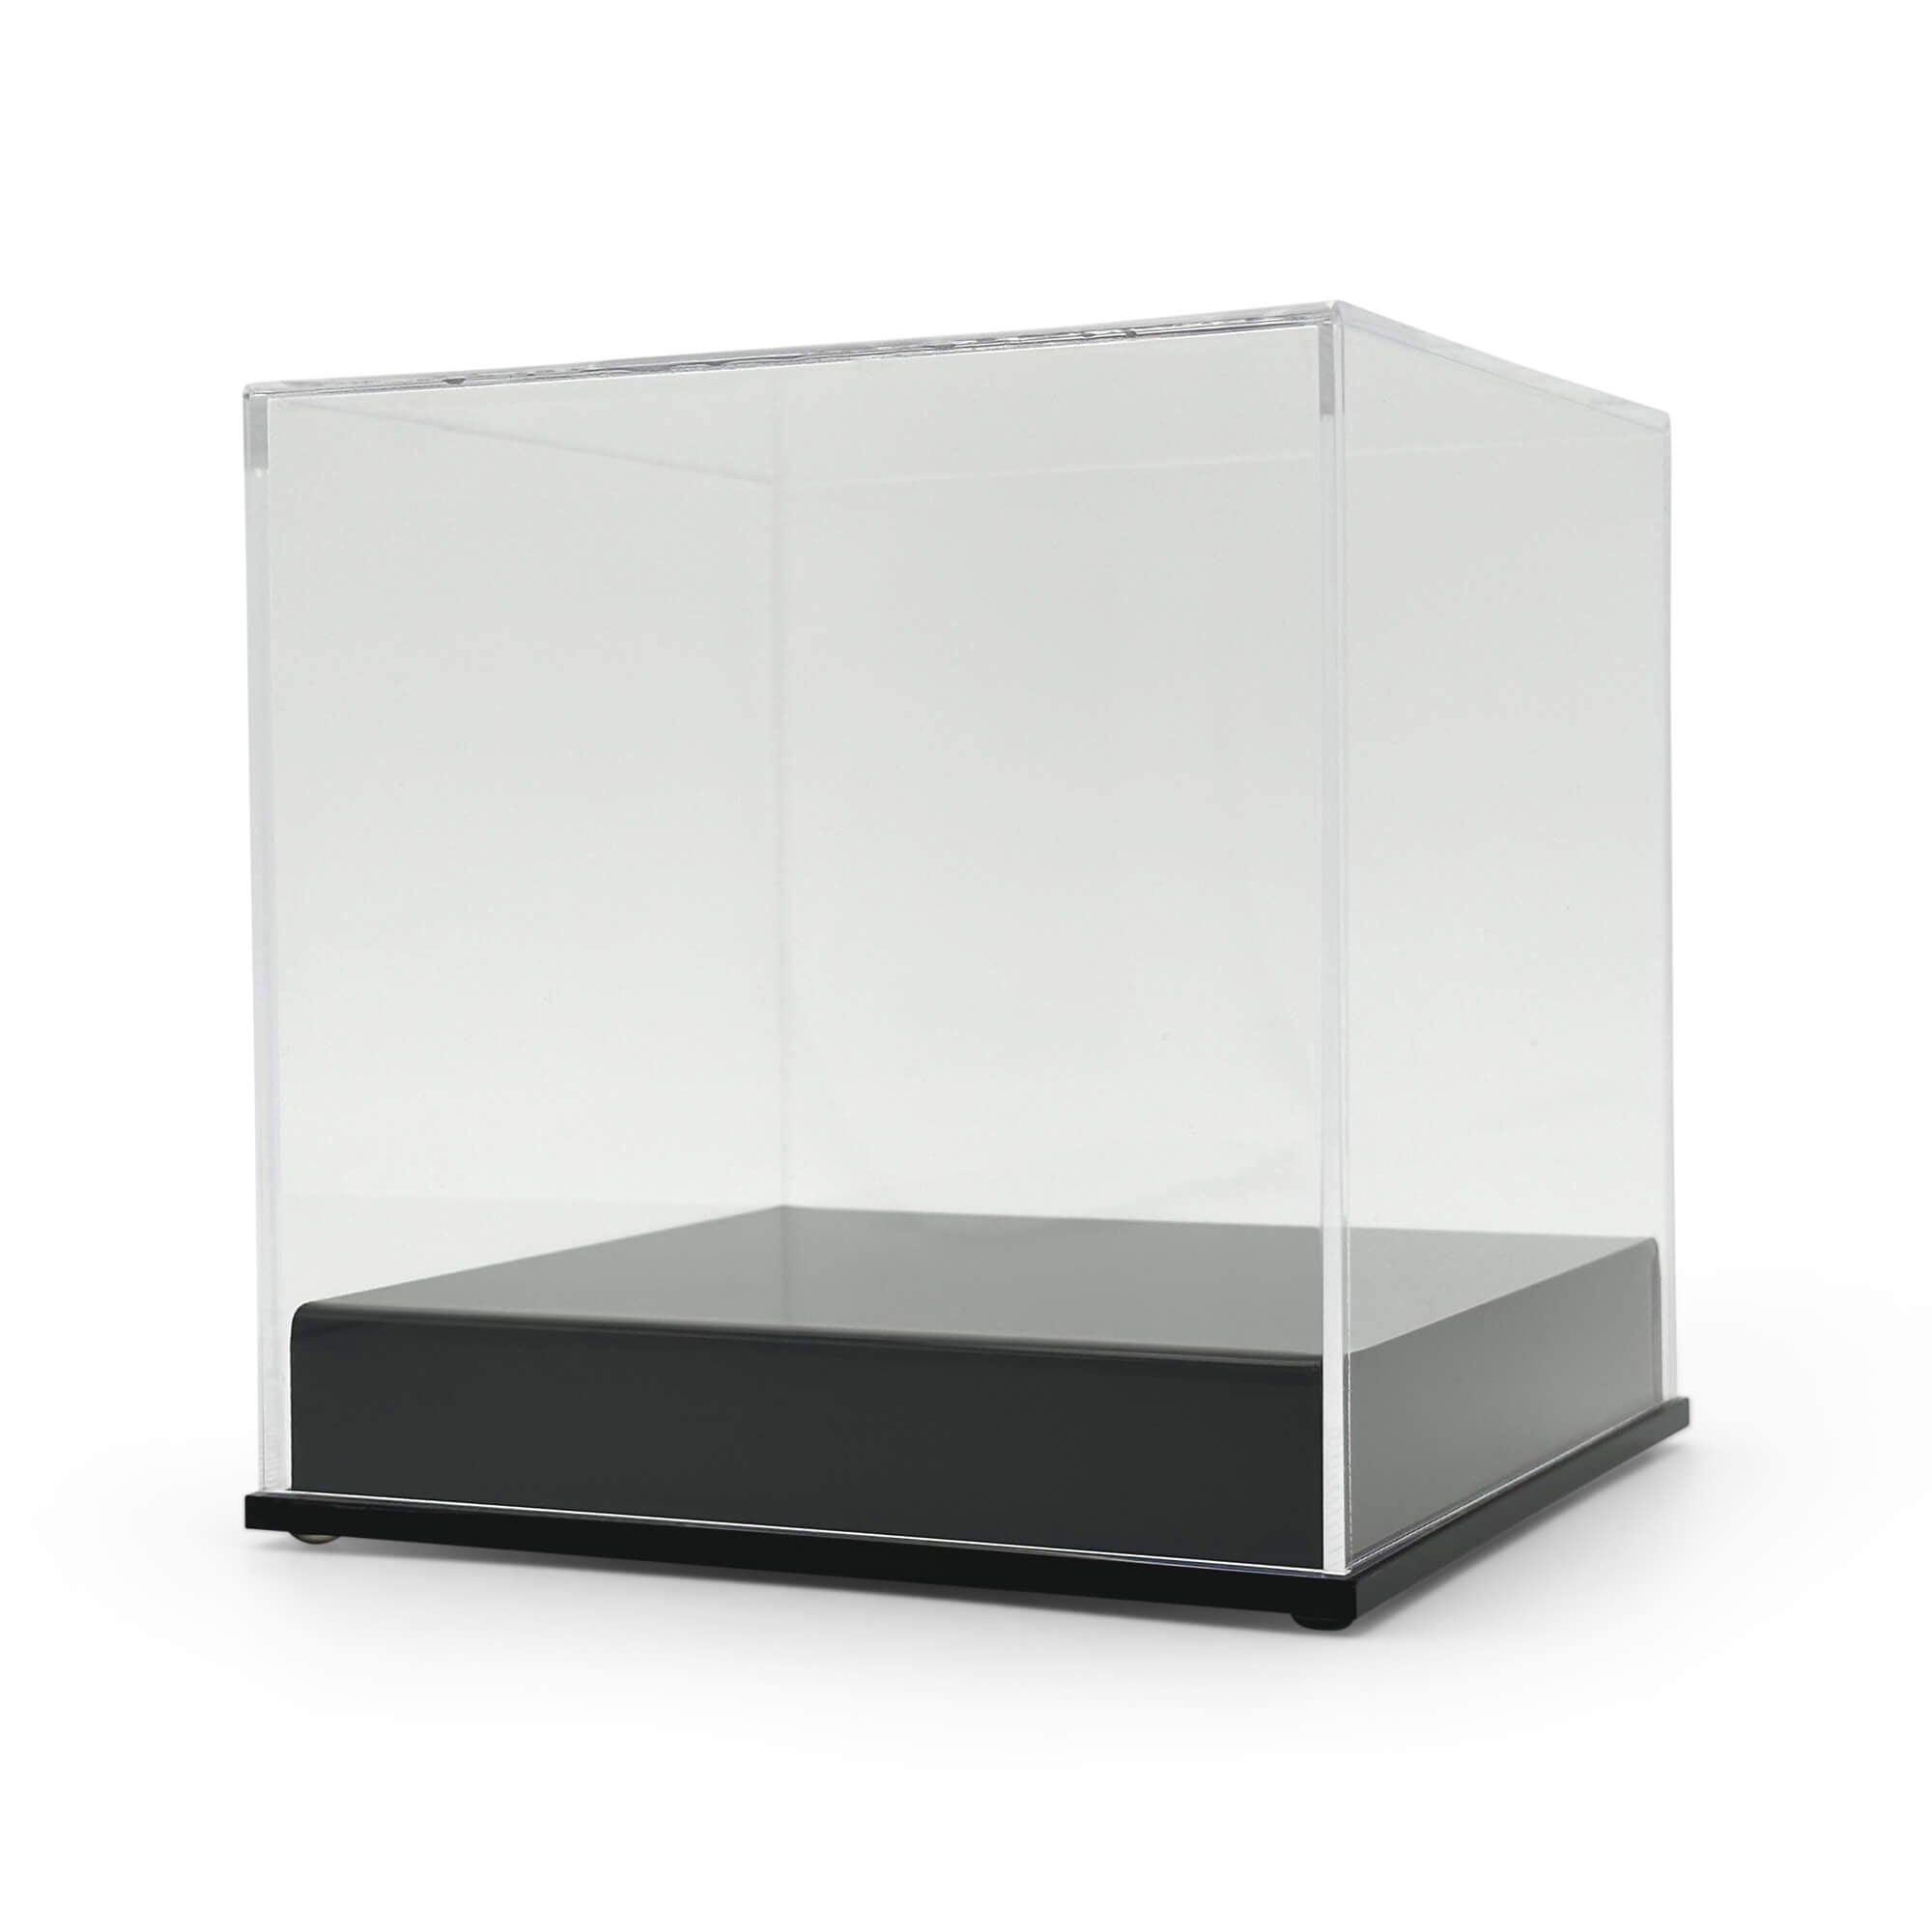 6" Clear Acrylic Display Box